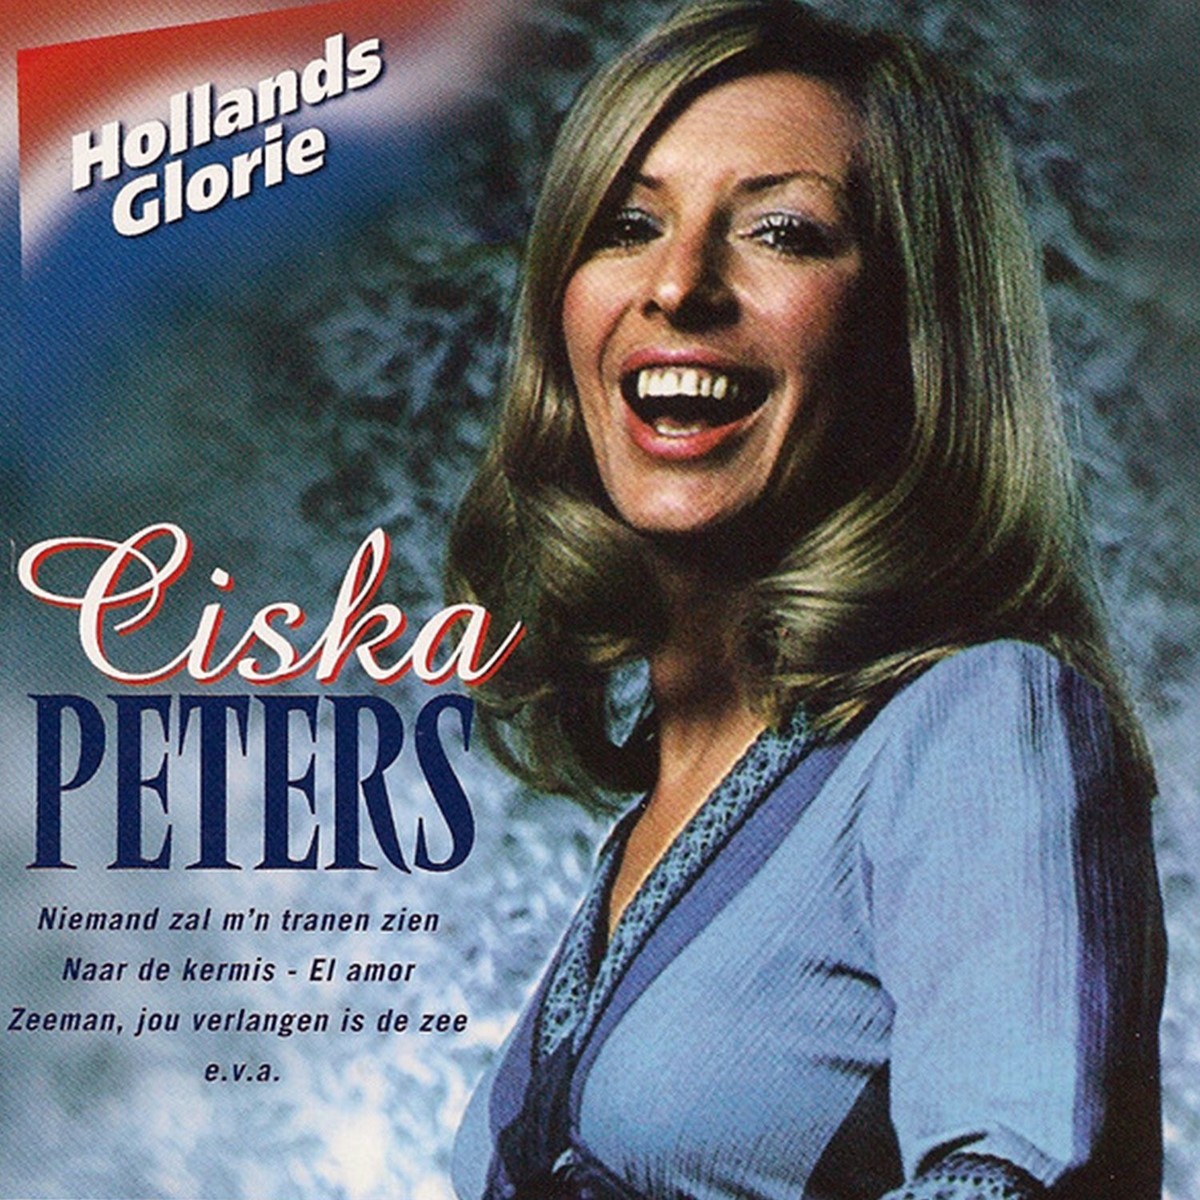 Hollands Glorie - Ciska Peters (2006)